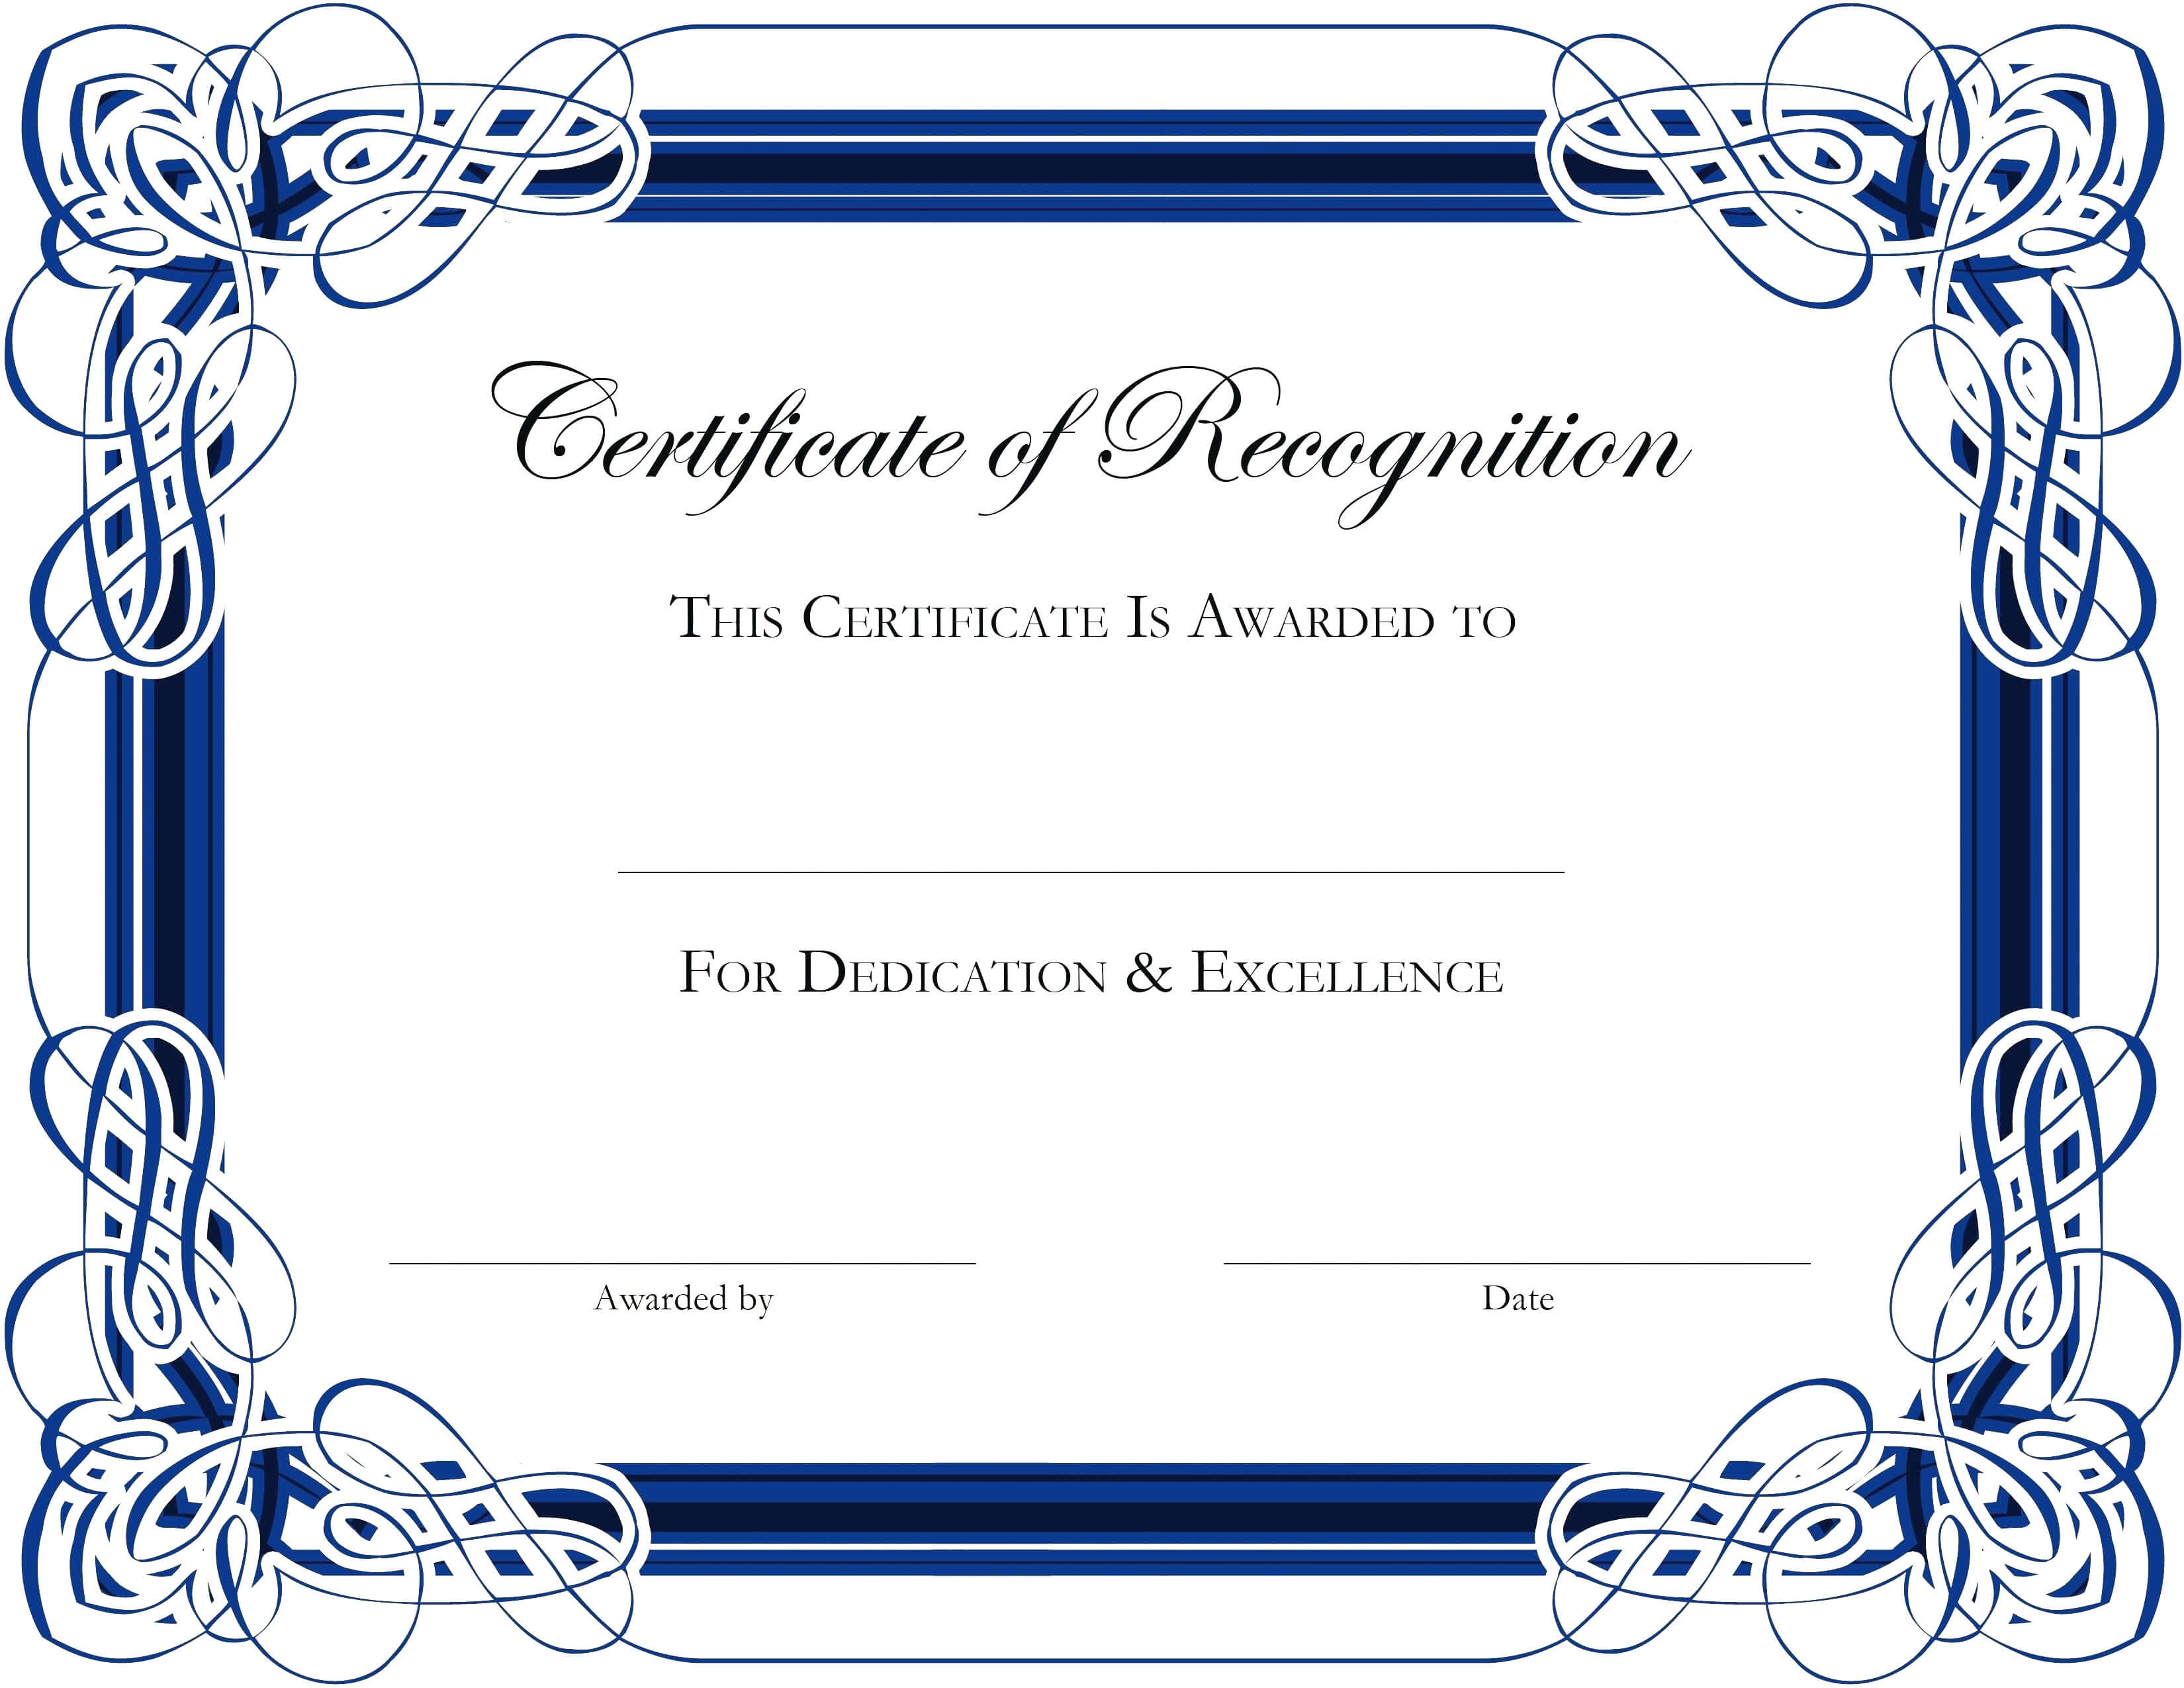 Award Certificate Templates Word 2007 - Atlantaauctionco Pertaining To Award Certificate Templates Word 2007